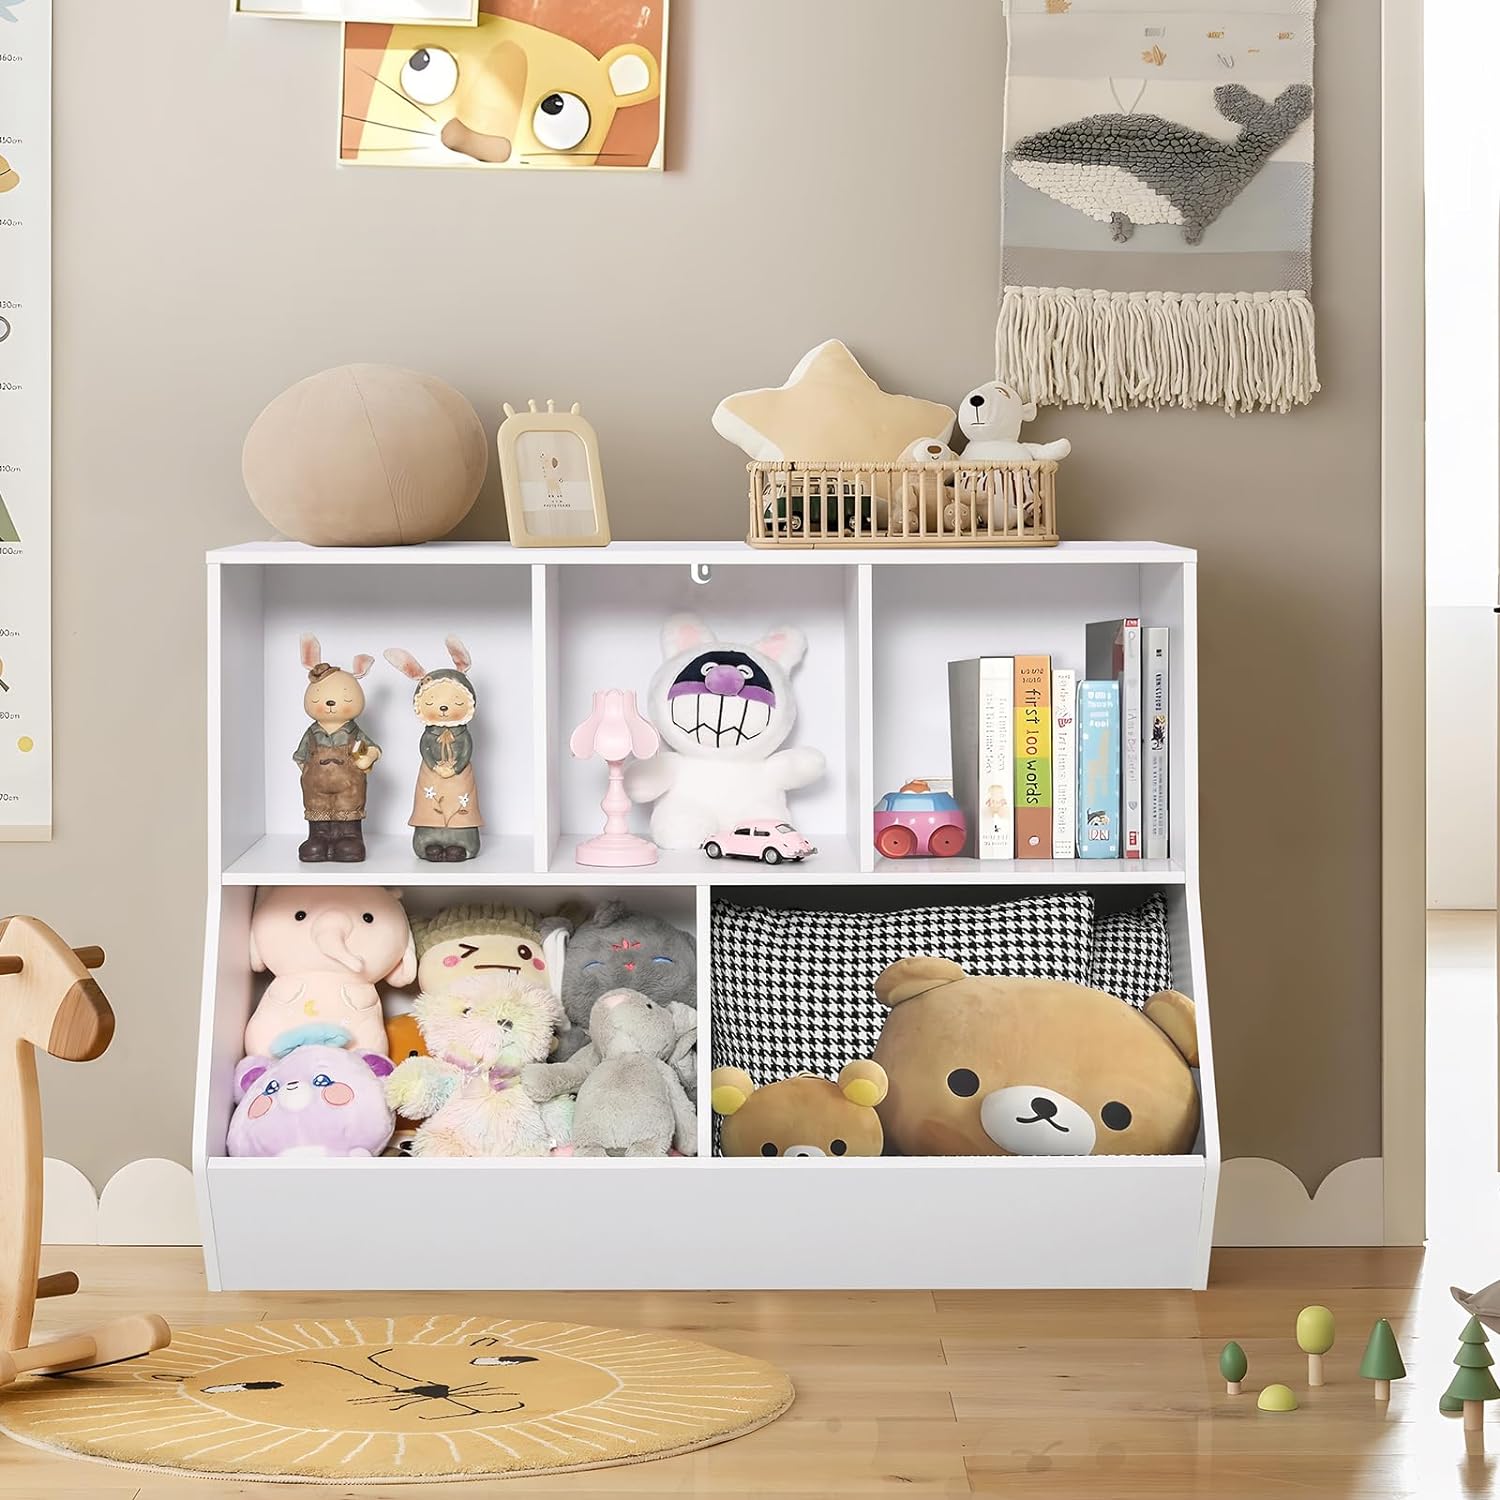 Mueble almacenaje juguetes: compra online